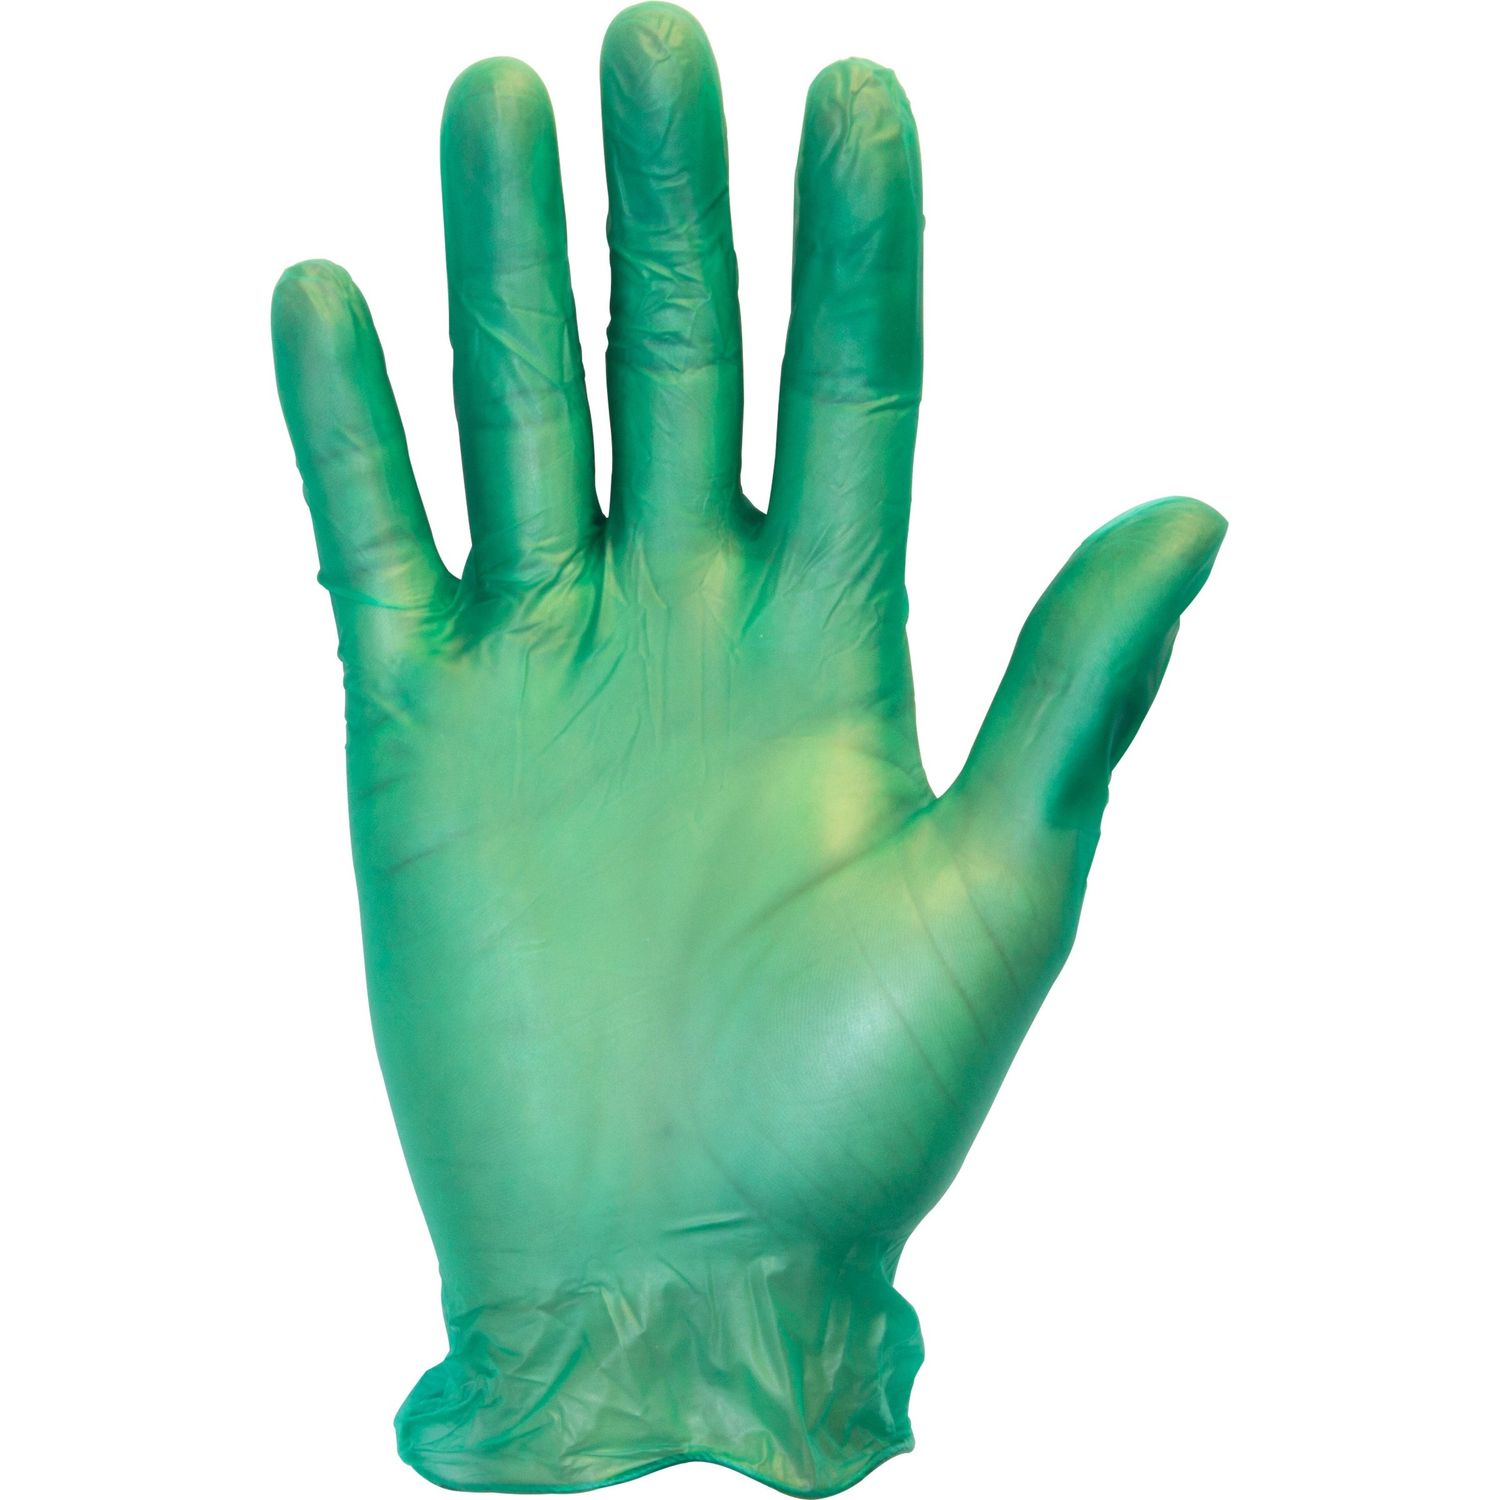 Powdered Green Vinyl Gloves Medium Size, Unisex, Vinyl, Green, Powdered, Latex-free, Comfortable, Allergen-free, Silicone-free, DINP-free, DEHP-free, Seamless, Rolled Cuff, Disposable, Ambidextrous